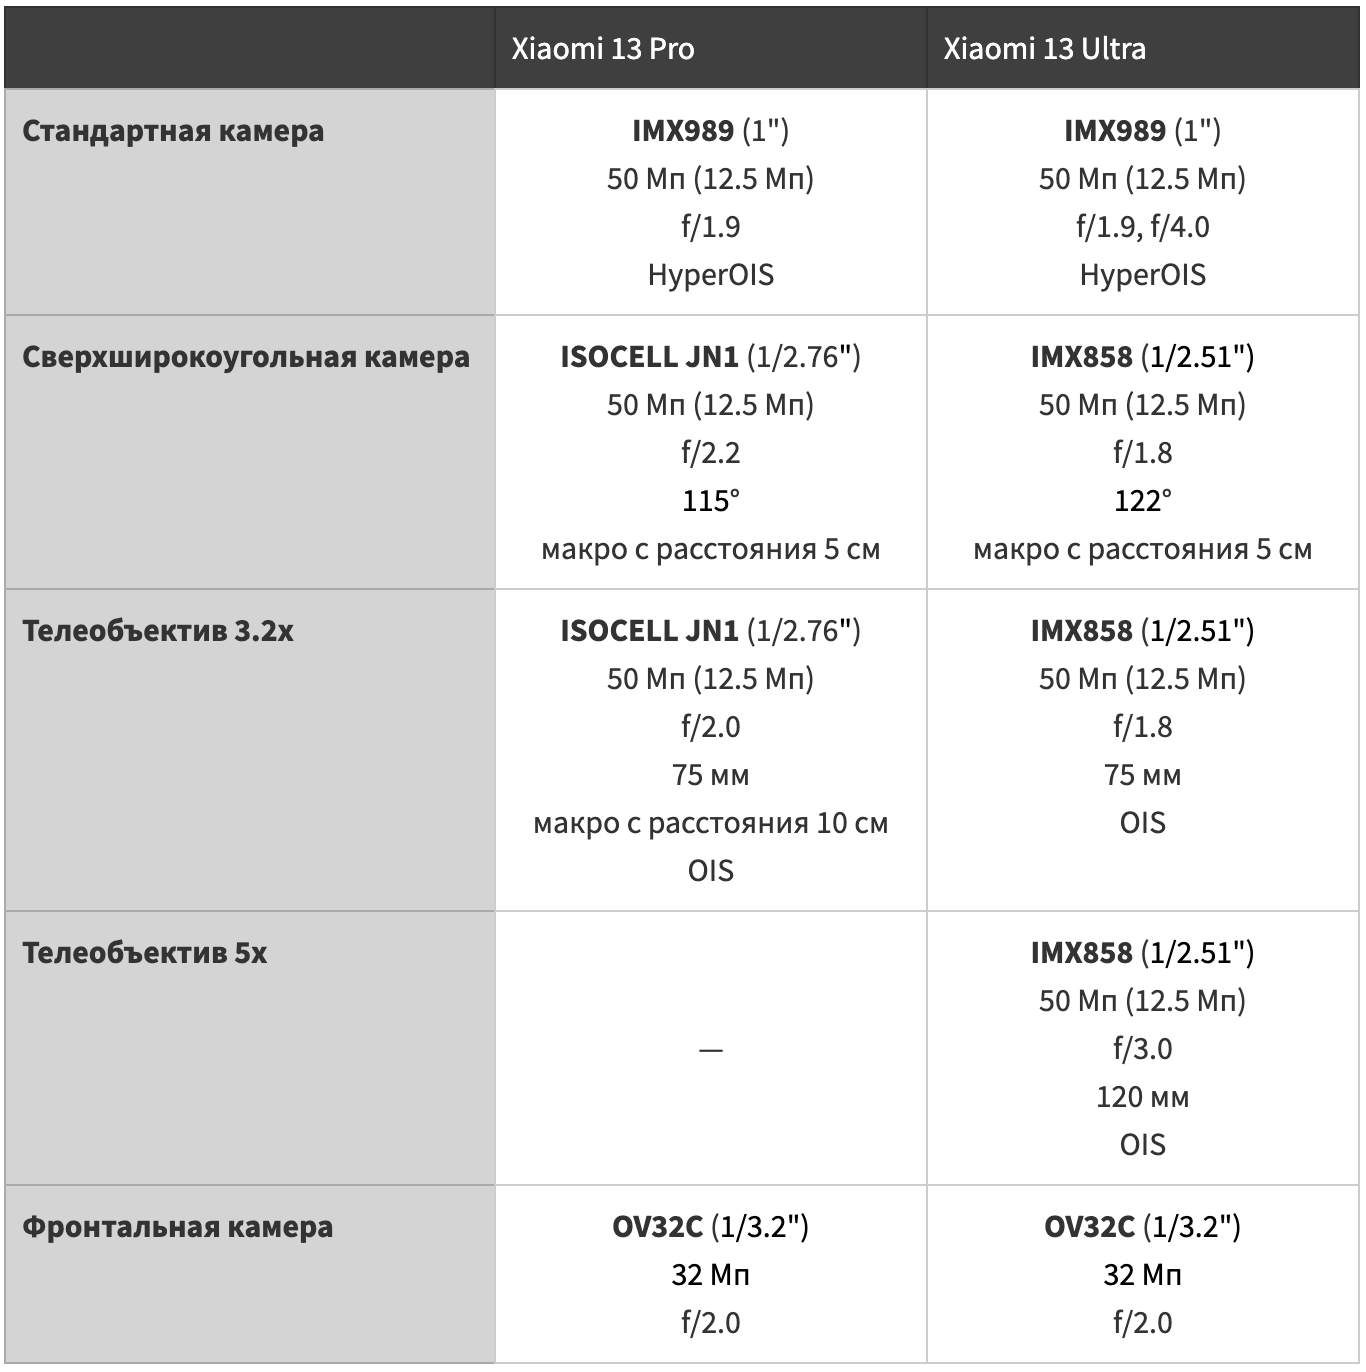 Ксиоми нот 13 характеристика. Камеры Xiaomi сравнительная таблица. Xiaomi 13 Pro характеристики. Таблица характеристик DJI. Отличие коробок Xiaomi 13t.